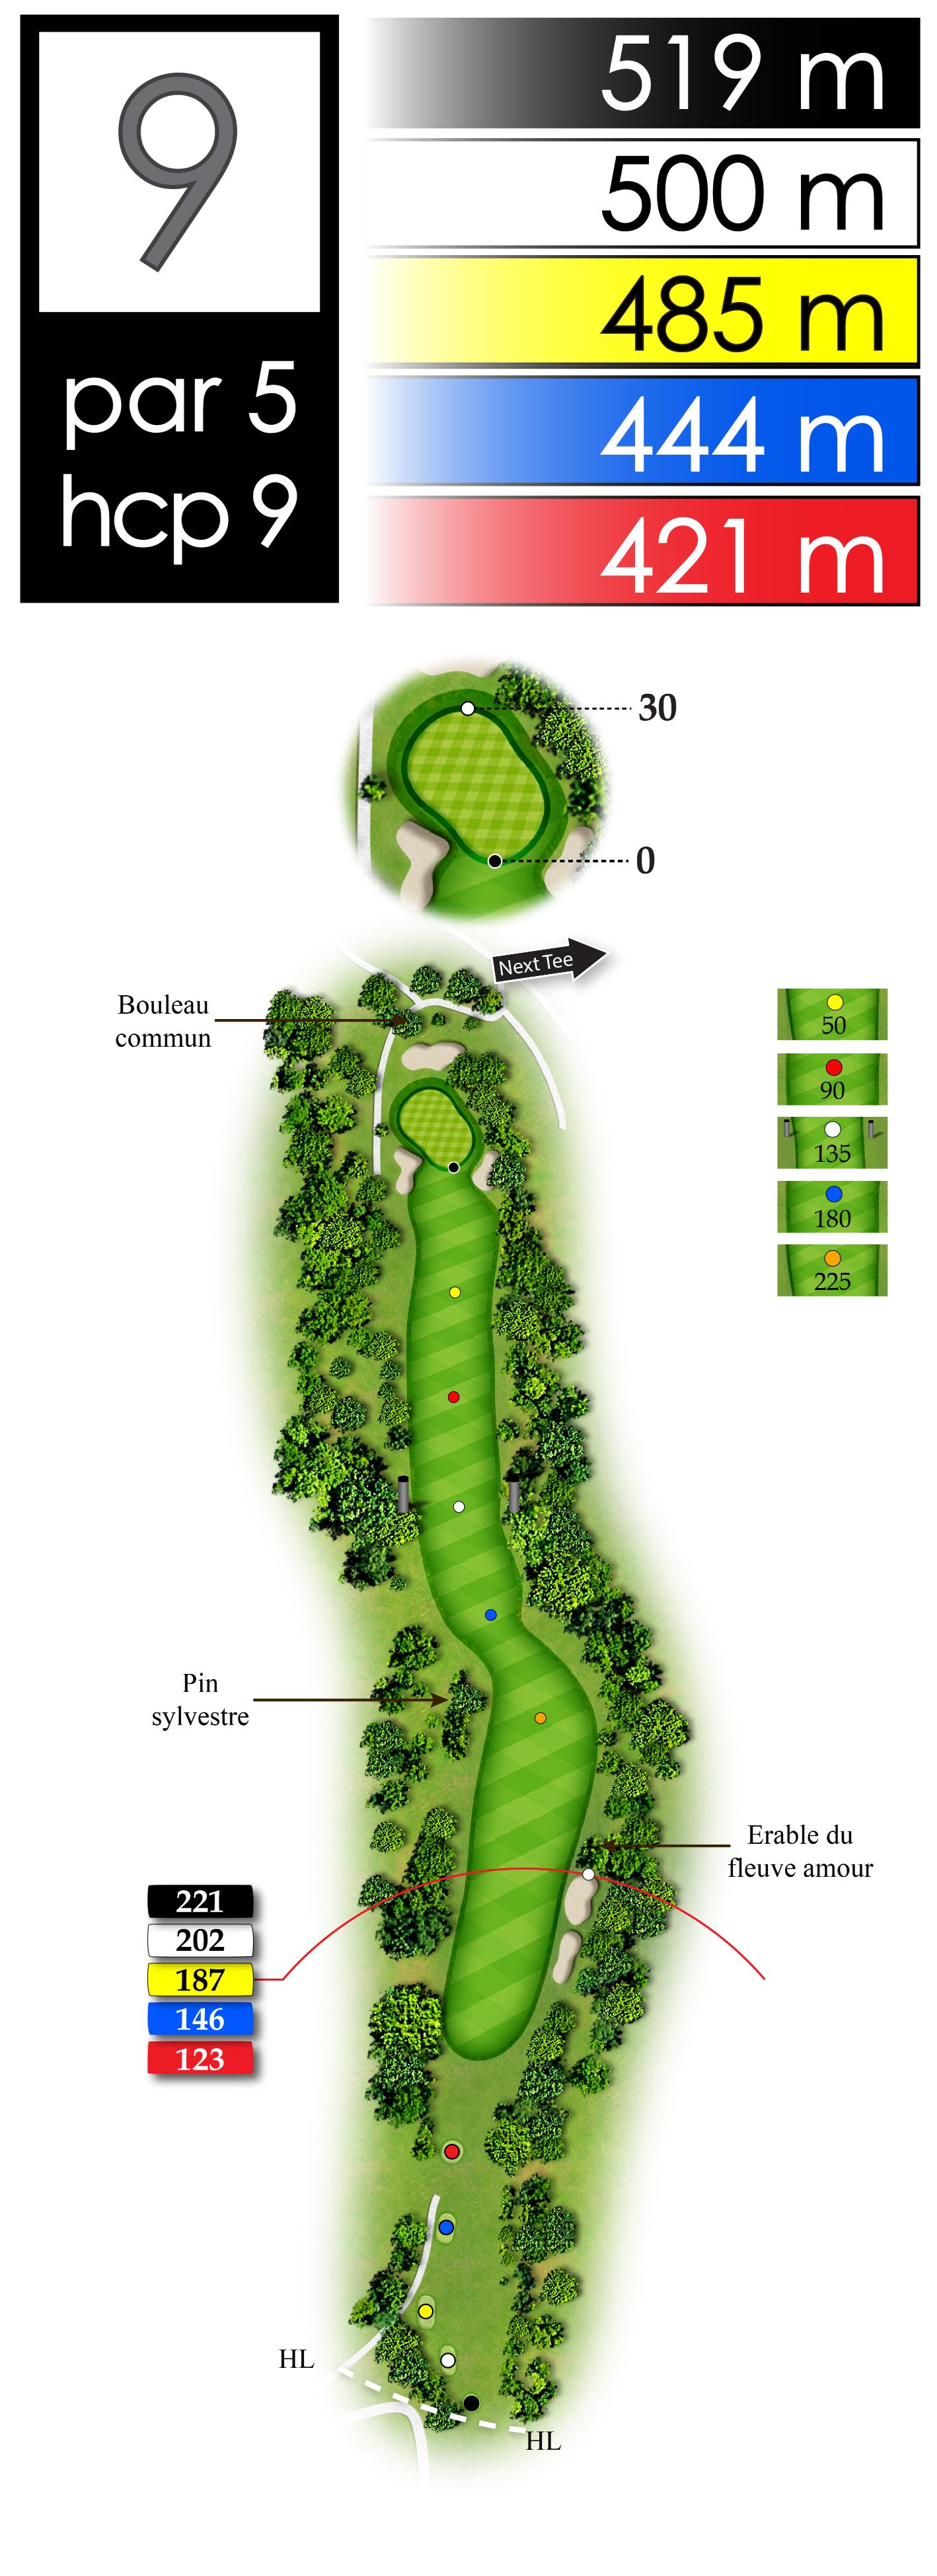 3D Golf Course Graphics